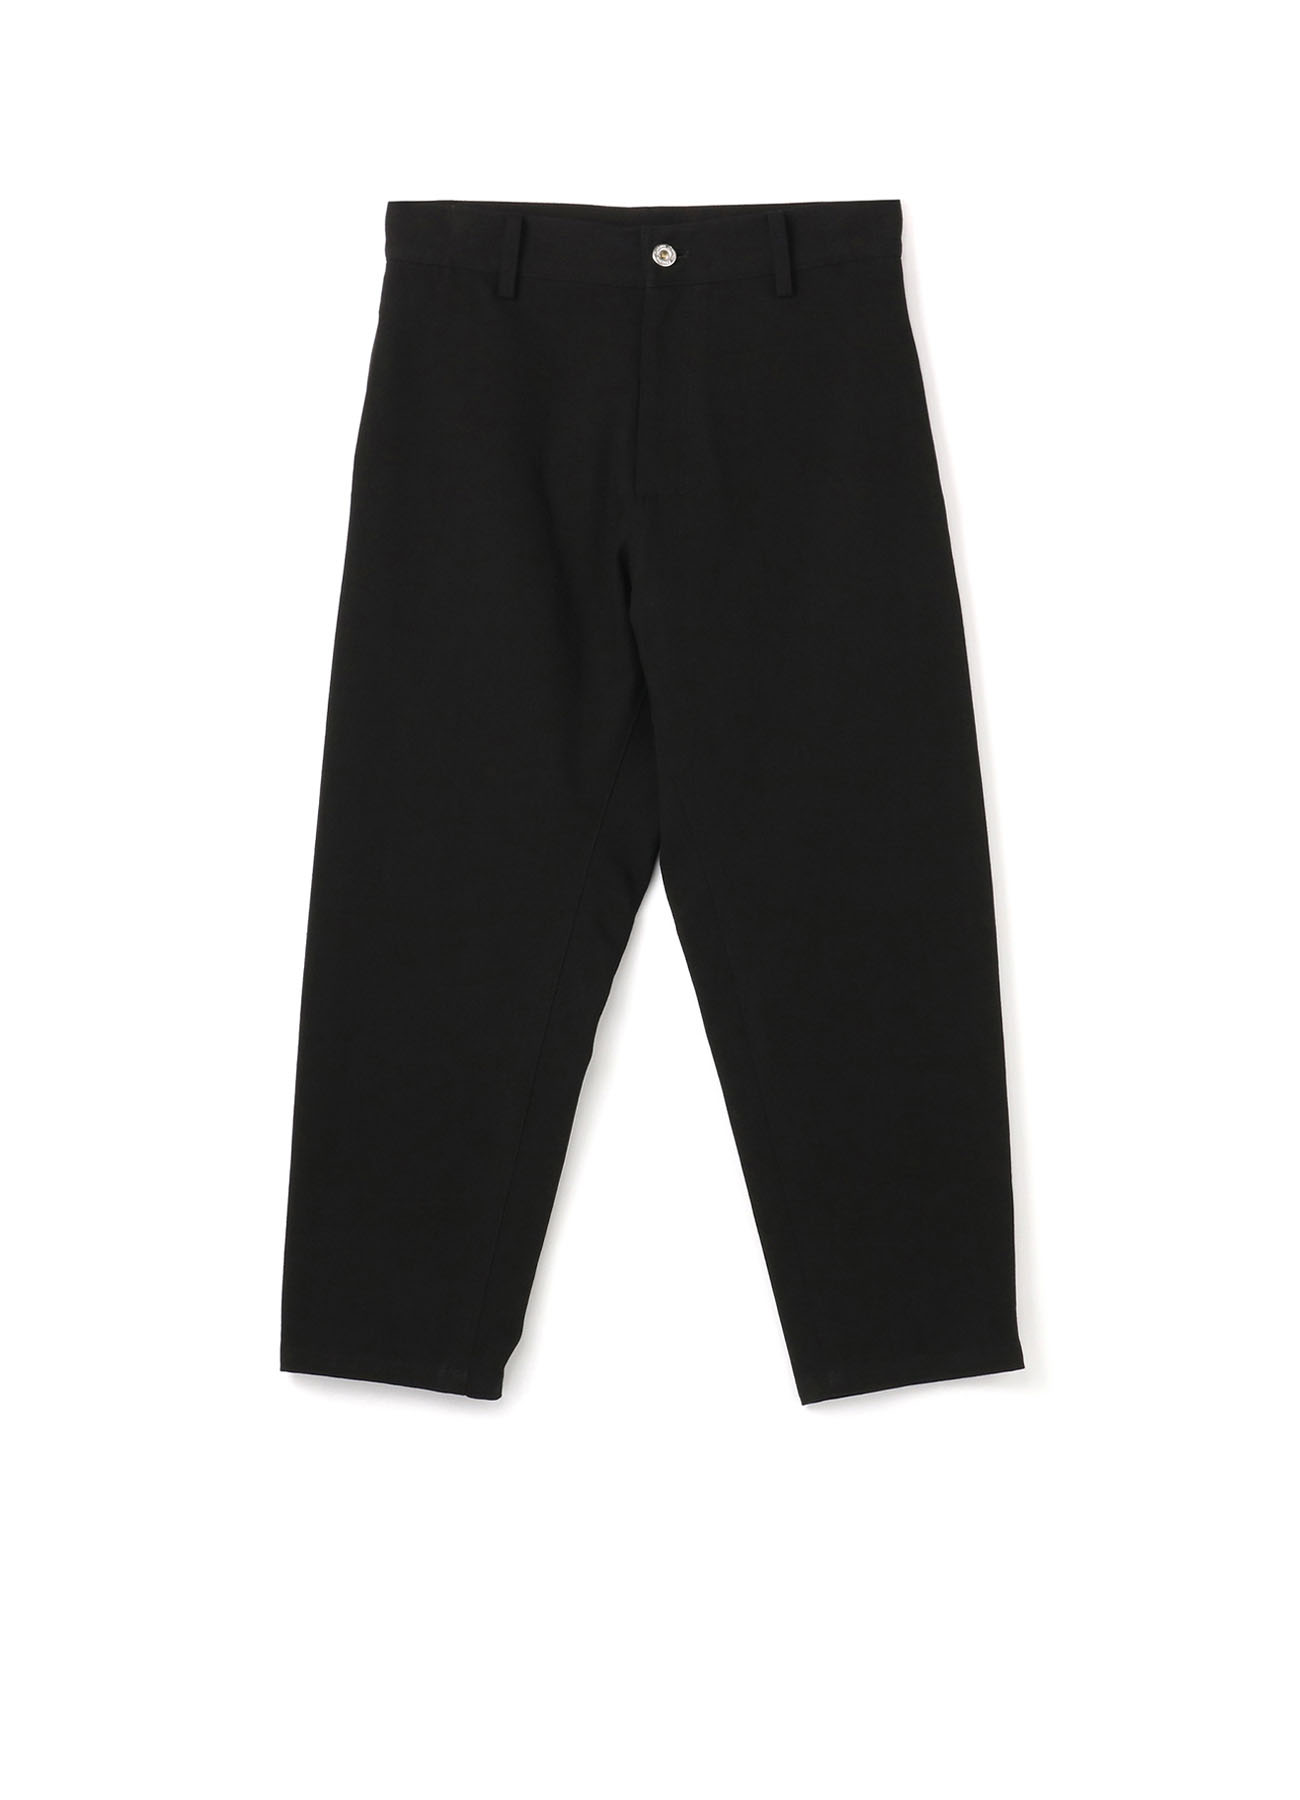 Black Denim Three Quarter Length Pants